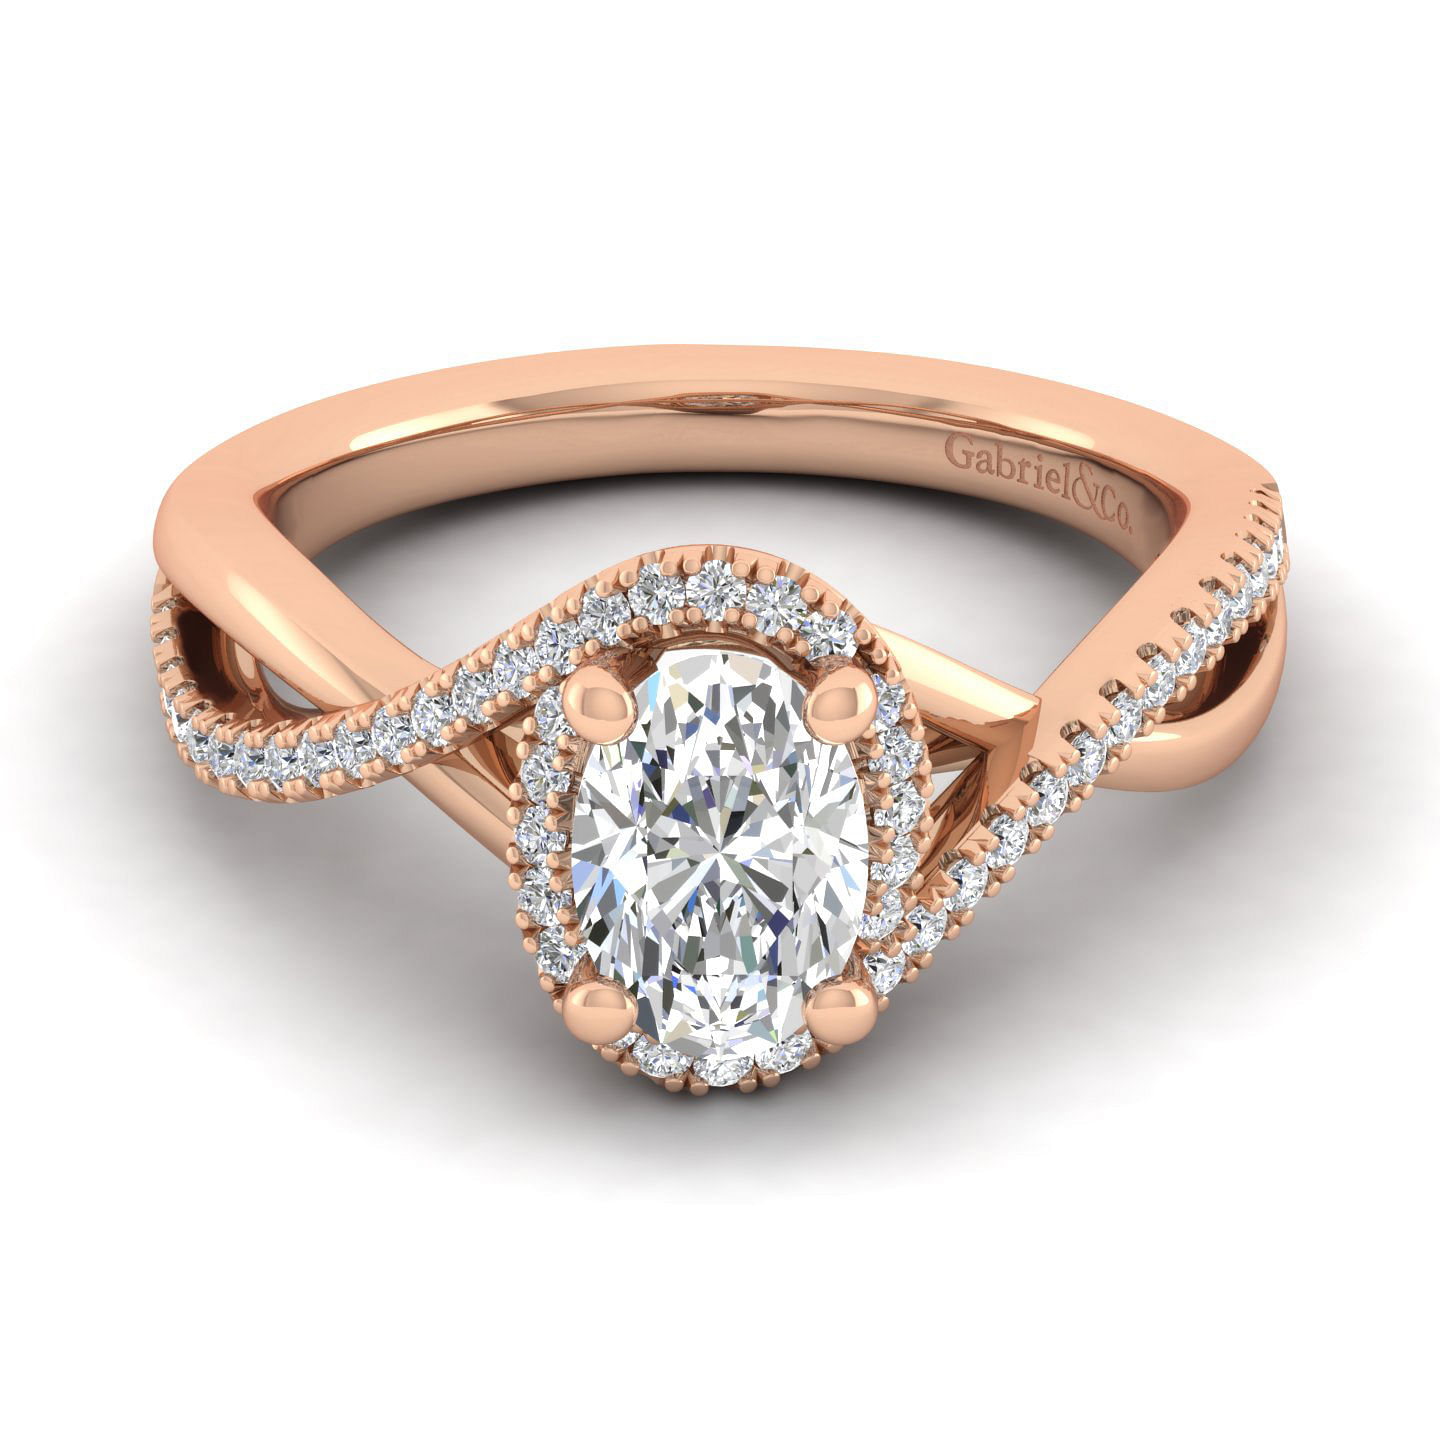 Courtney - 14K Rose Gold Oval Halo Diamond Engagement Ring